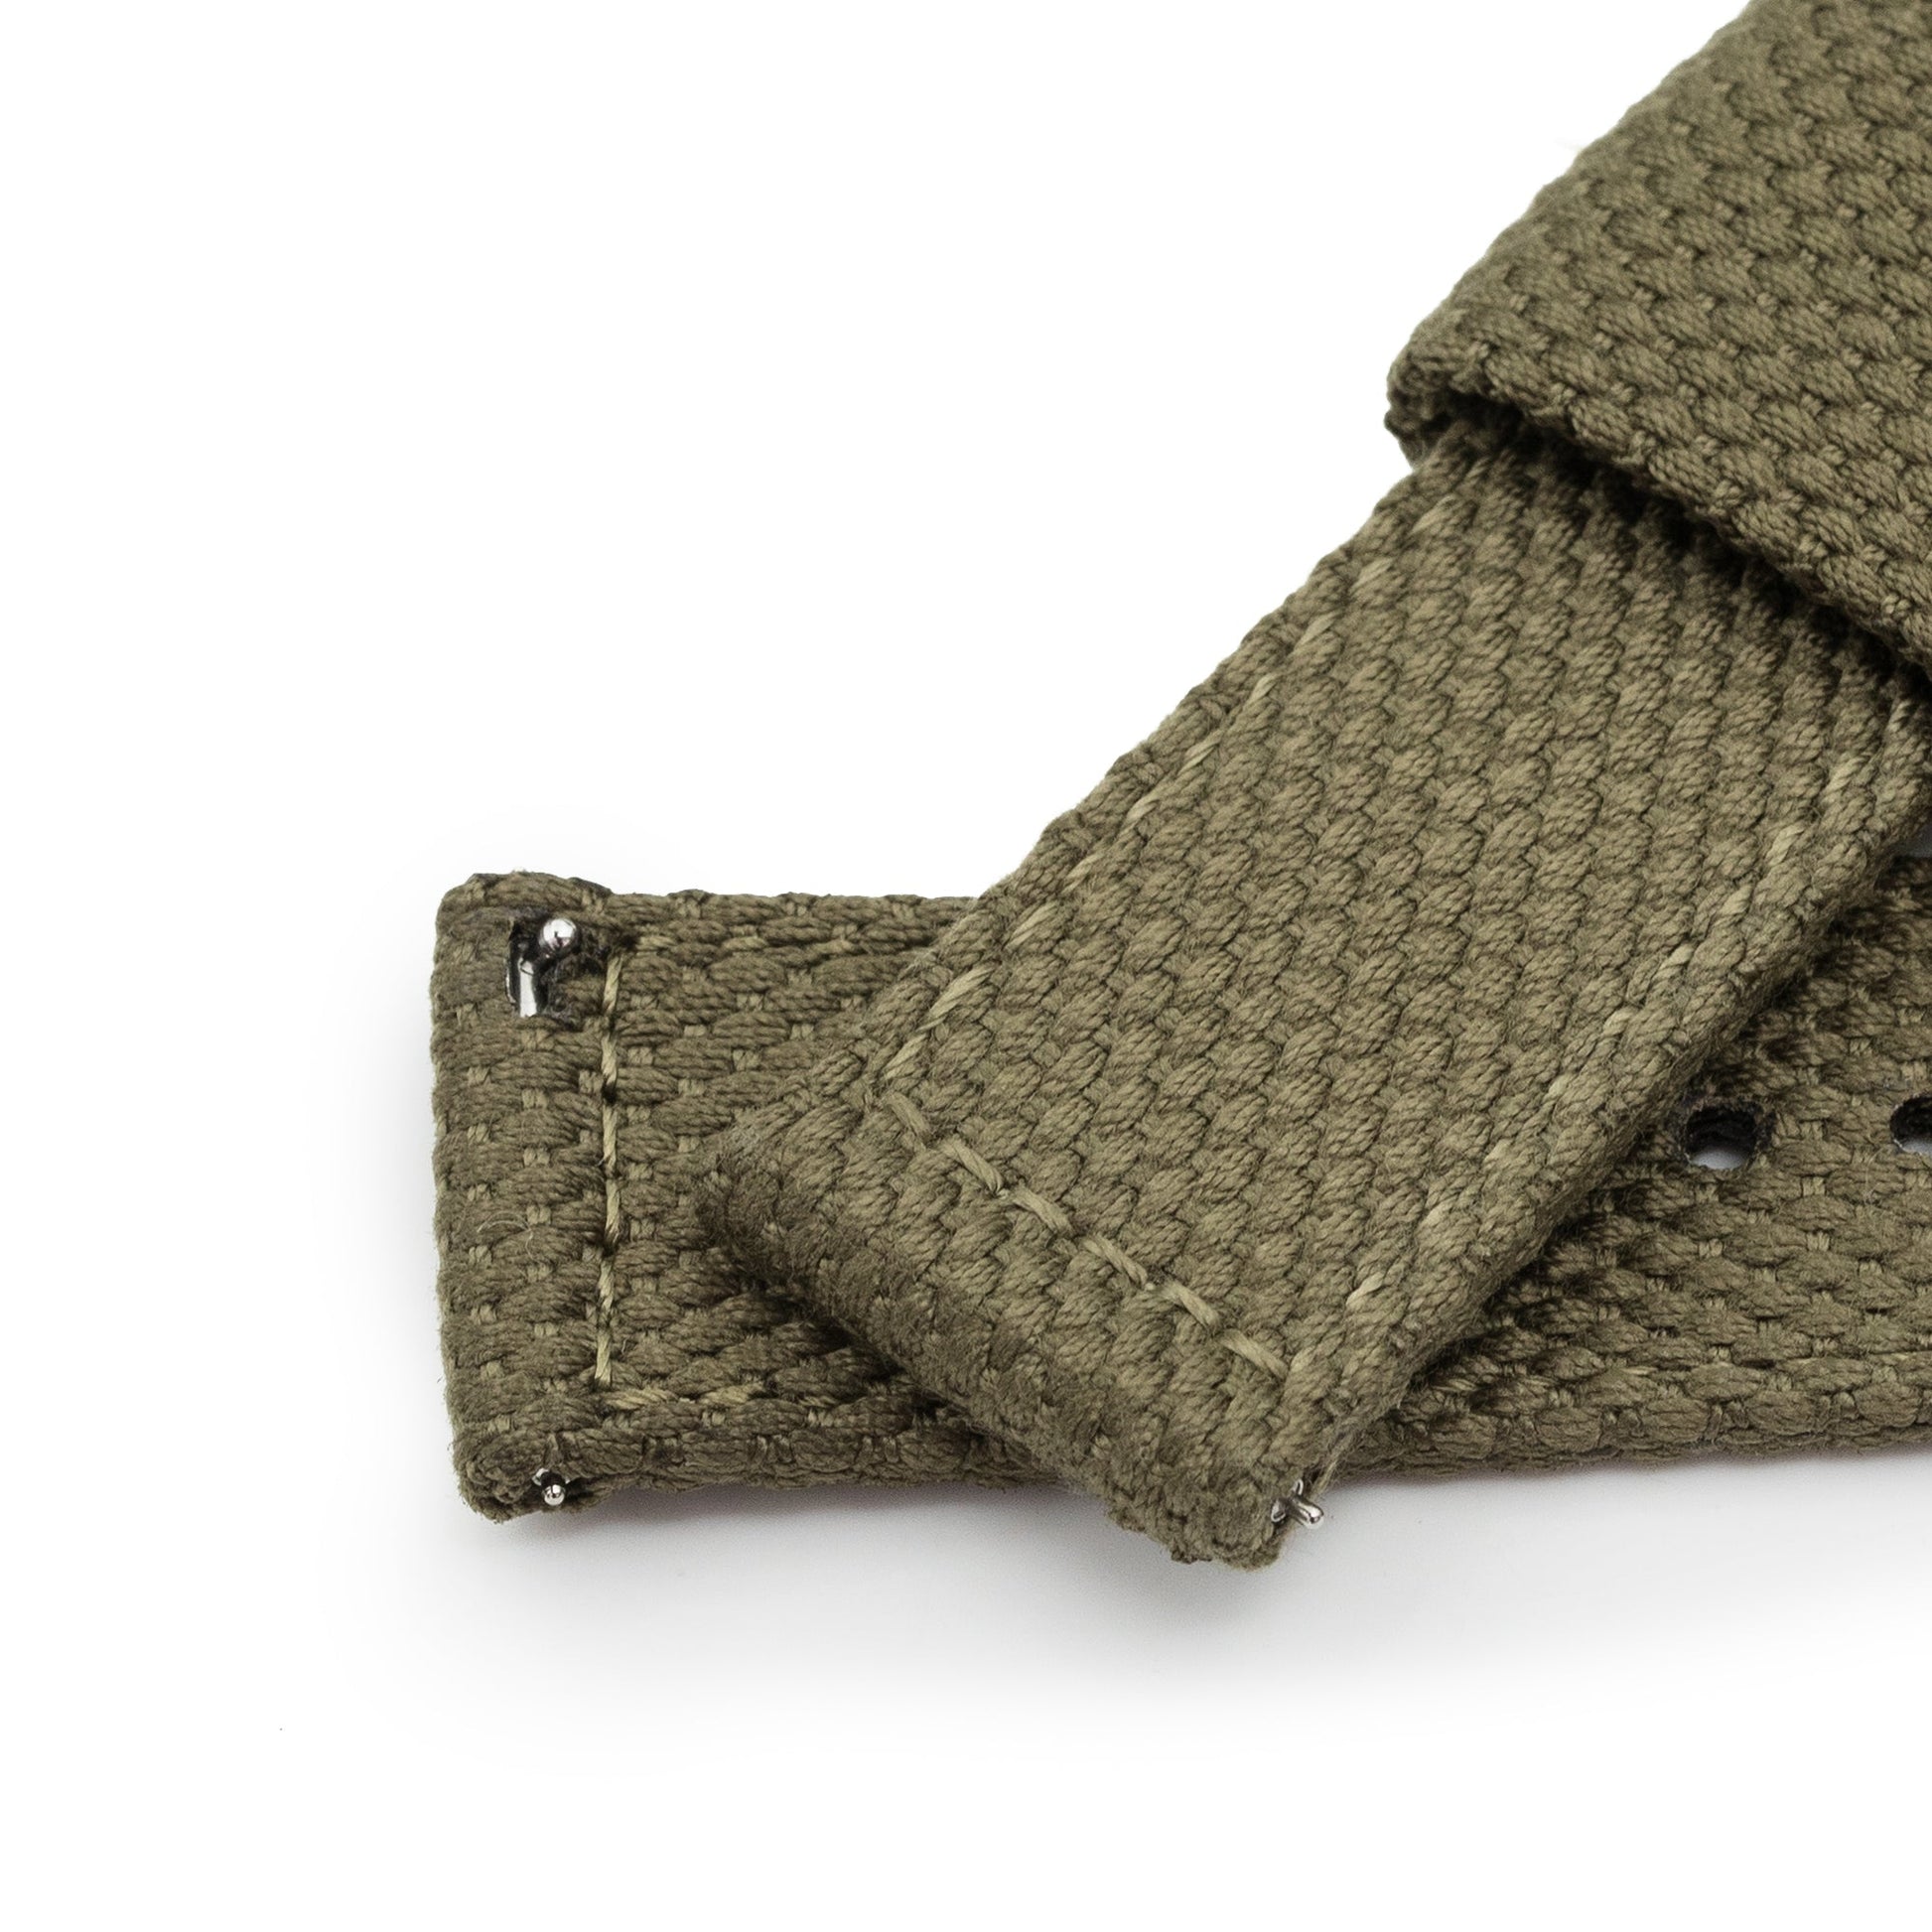 Military Green Premium Nylon Honeycomb Weave Quick release Watch Strap